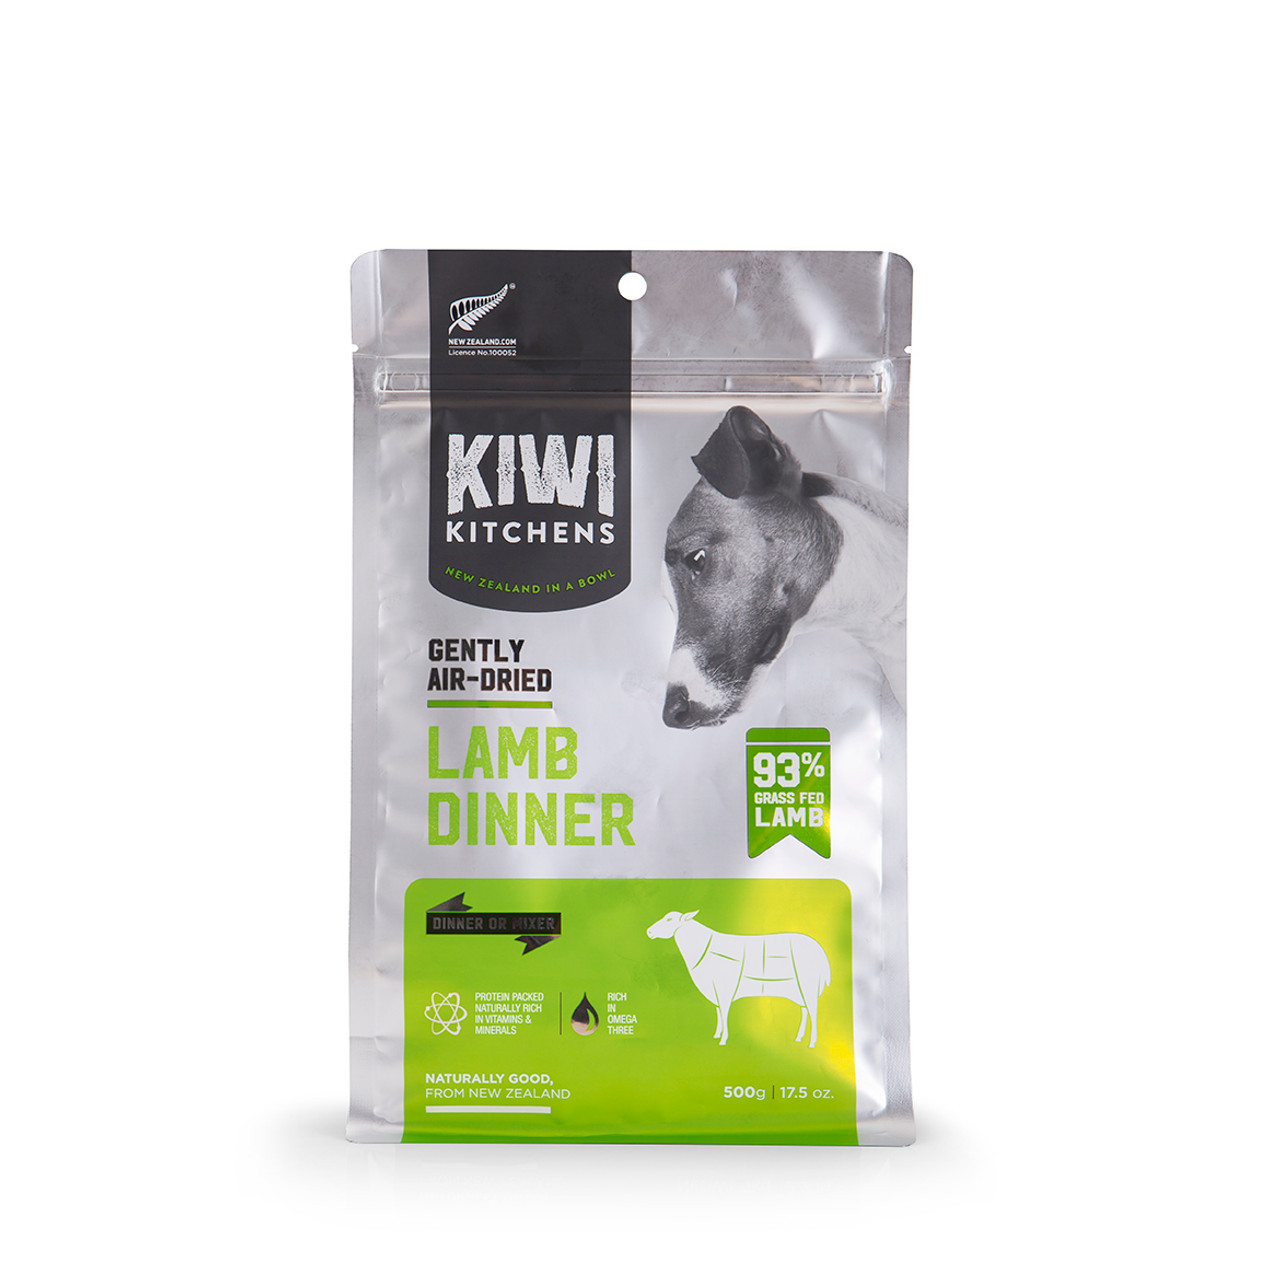 Where to Buy Kiwi Kitchens Dog Food? 2